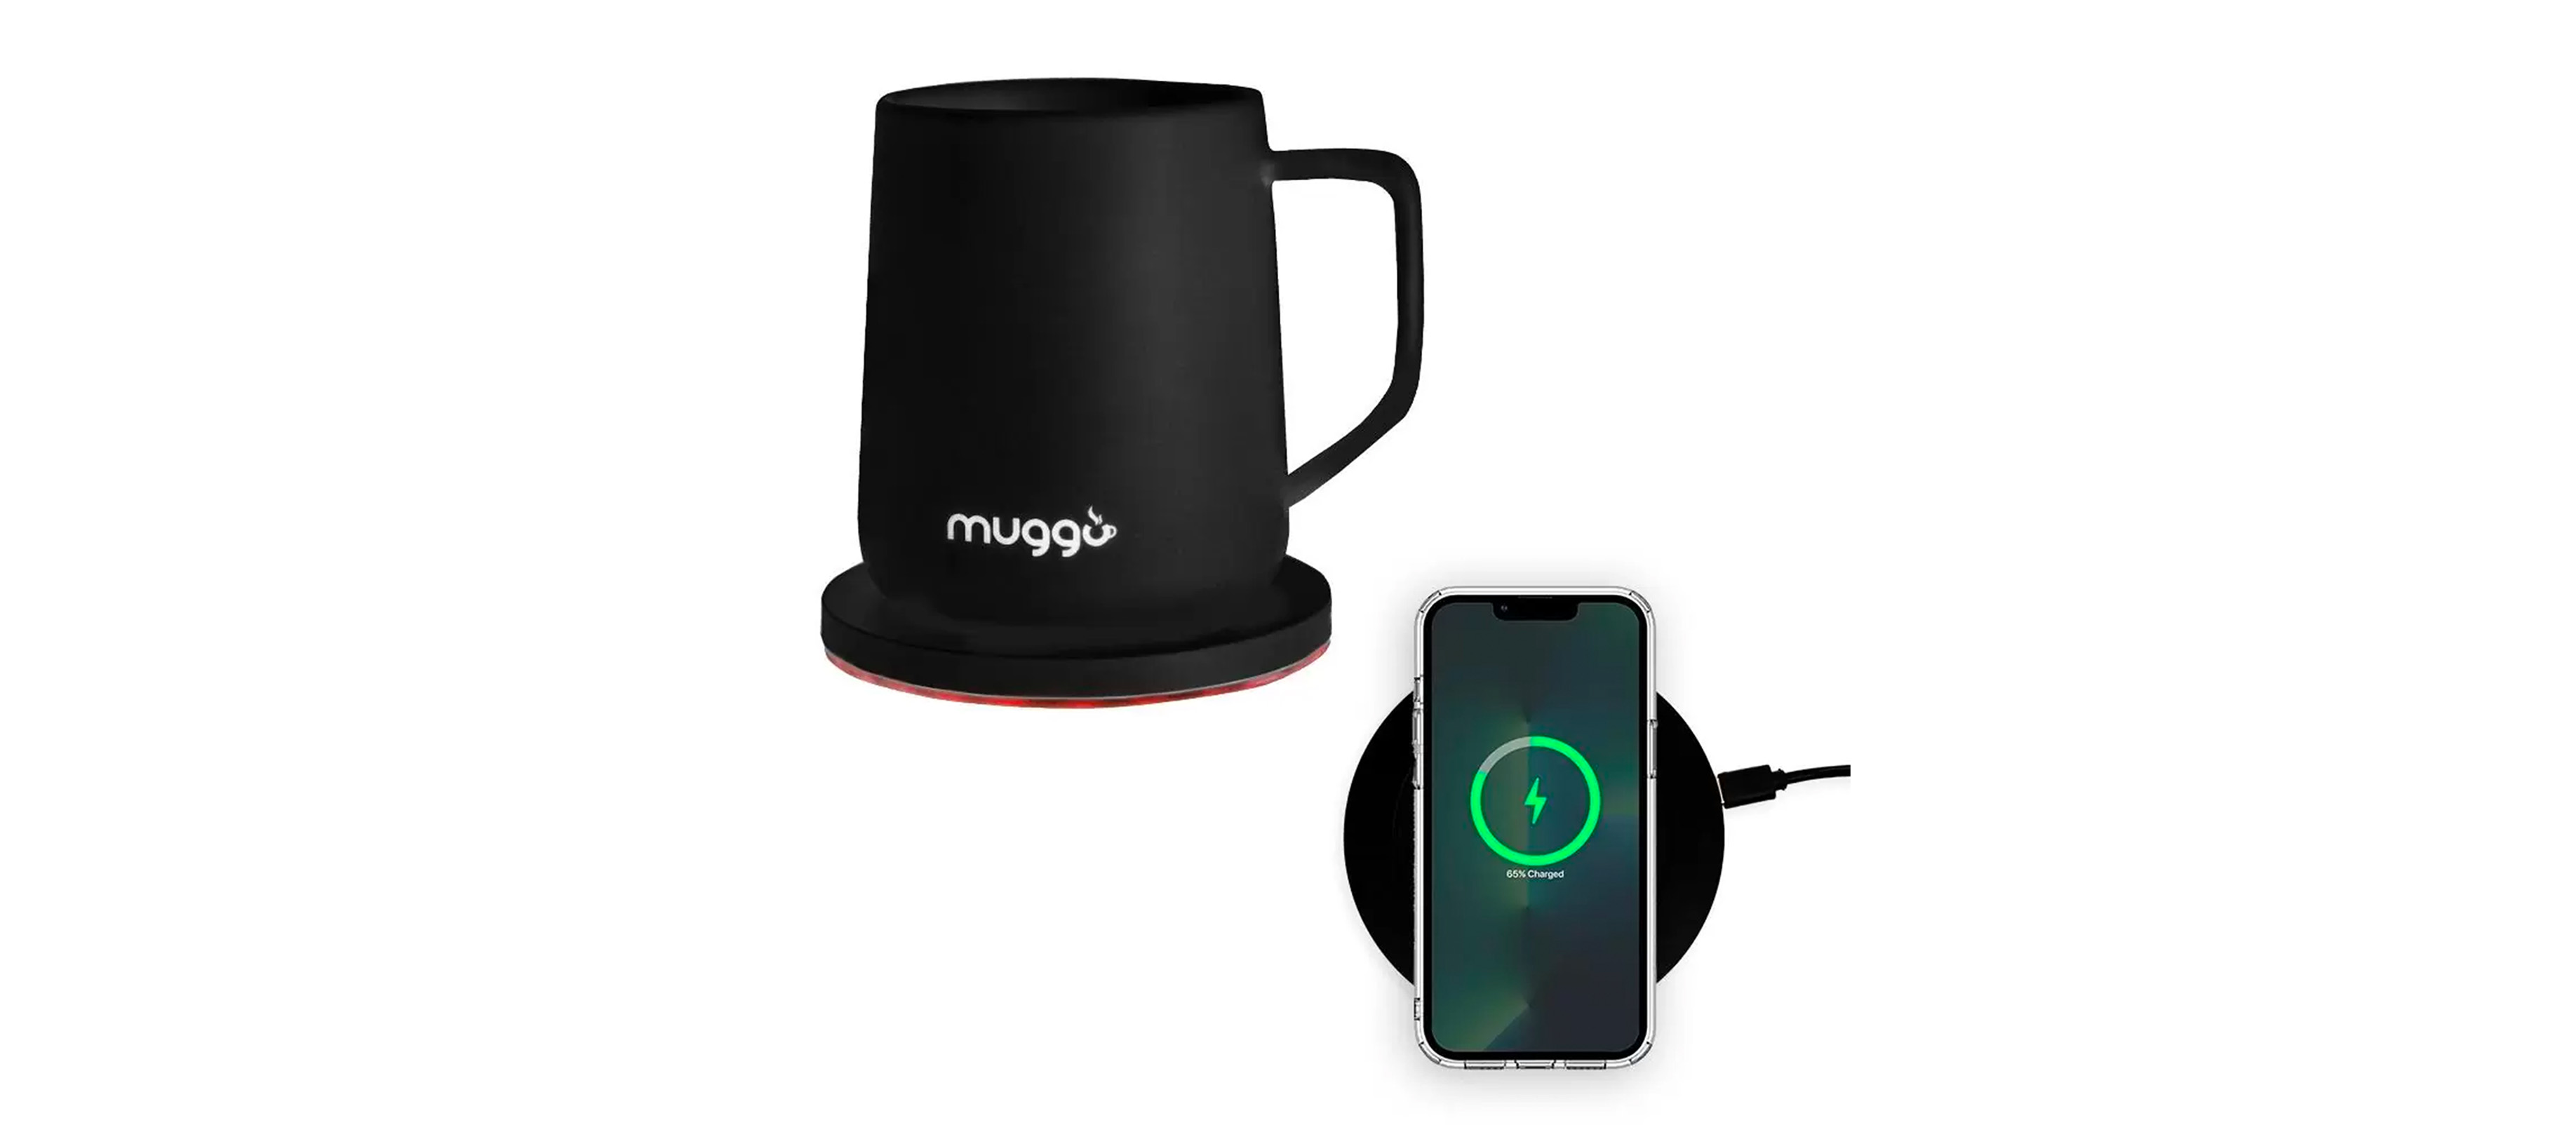 Muggo QI Grande Intelligent Self-Heated Cup